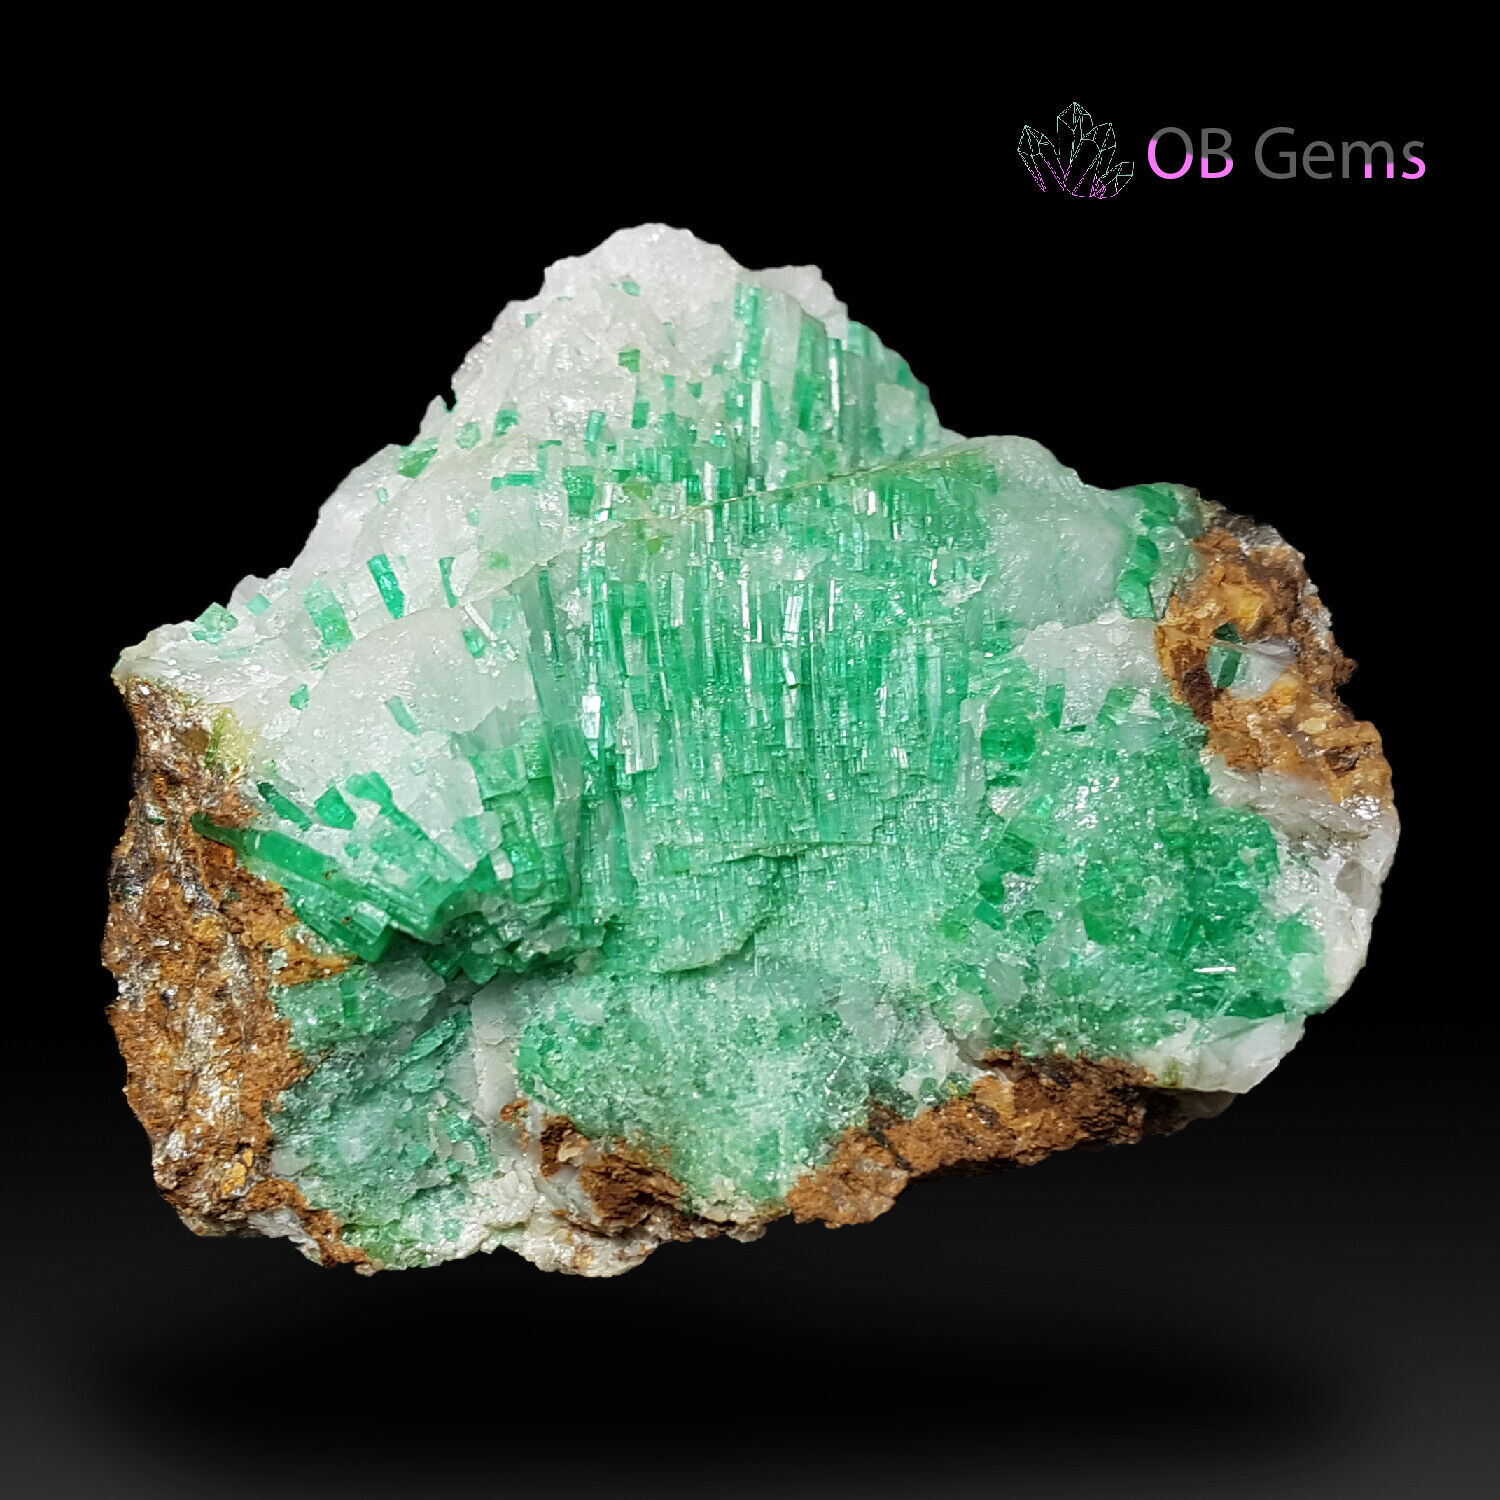 Rare Emerald Mineral Specimen - 809 CT | Abundant Crystal Clusters Inside Matrix